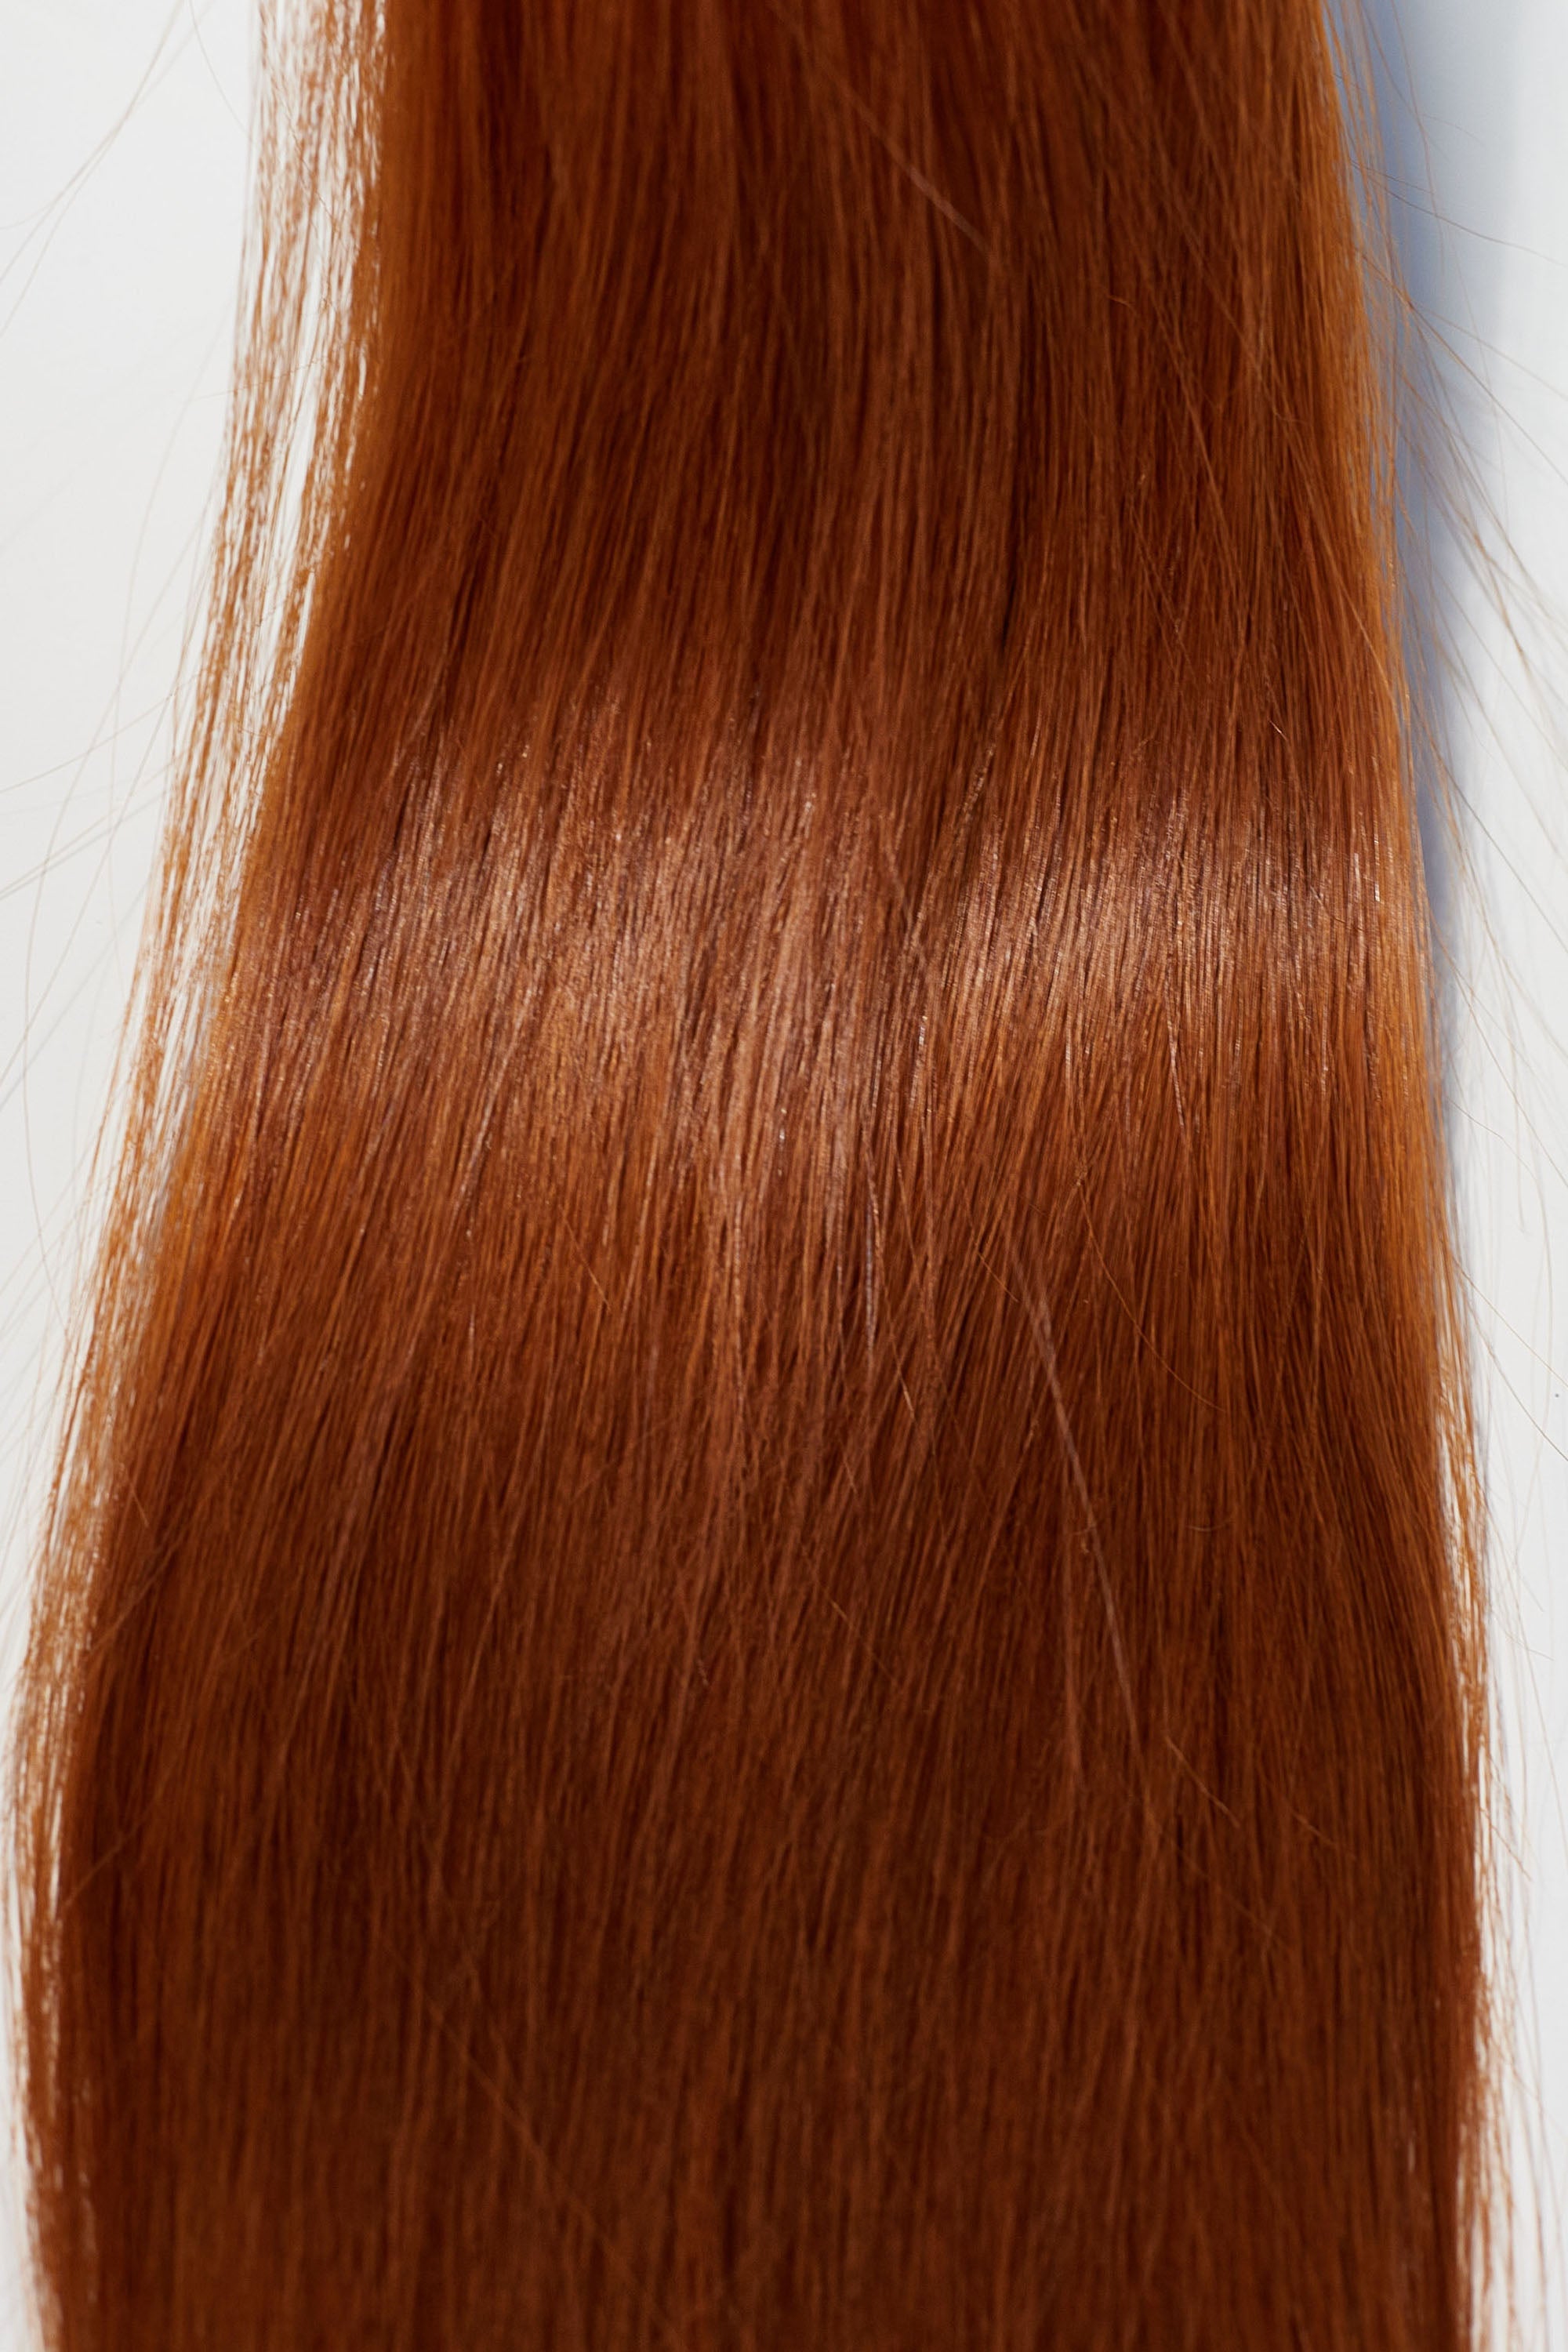 Behair professional Keratin Tip "Premium" 24" (60cm) Natural Straight Brilliant Copper #130 - 25g (Standart - 0.7g each pcs) hair extensions